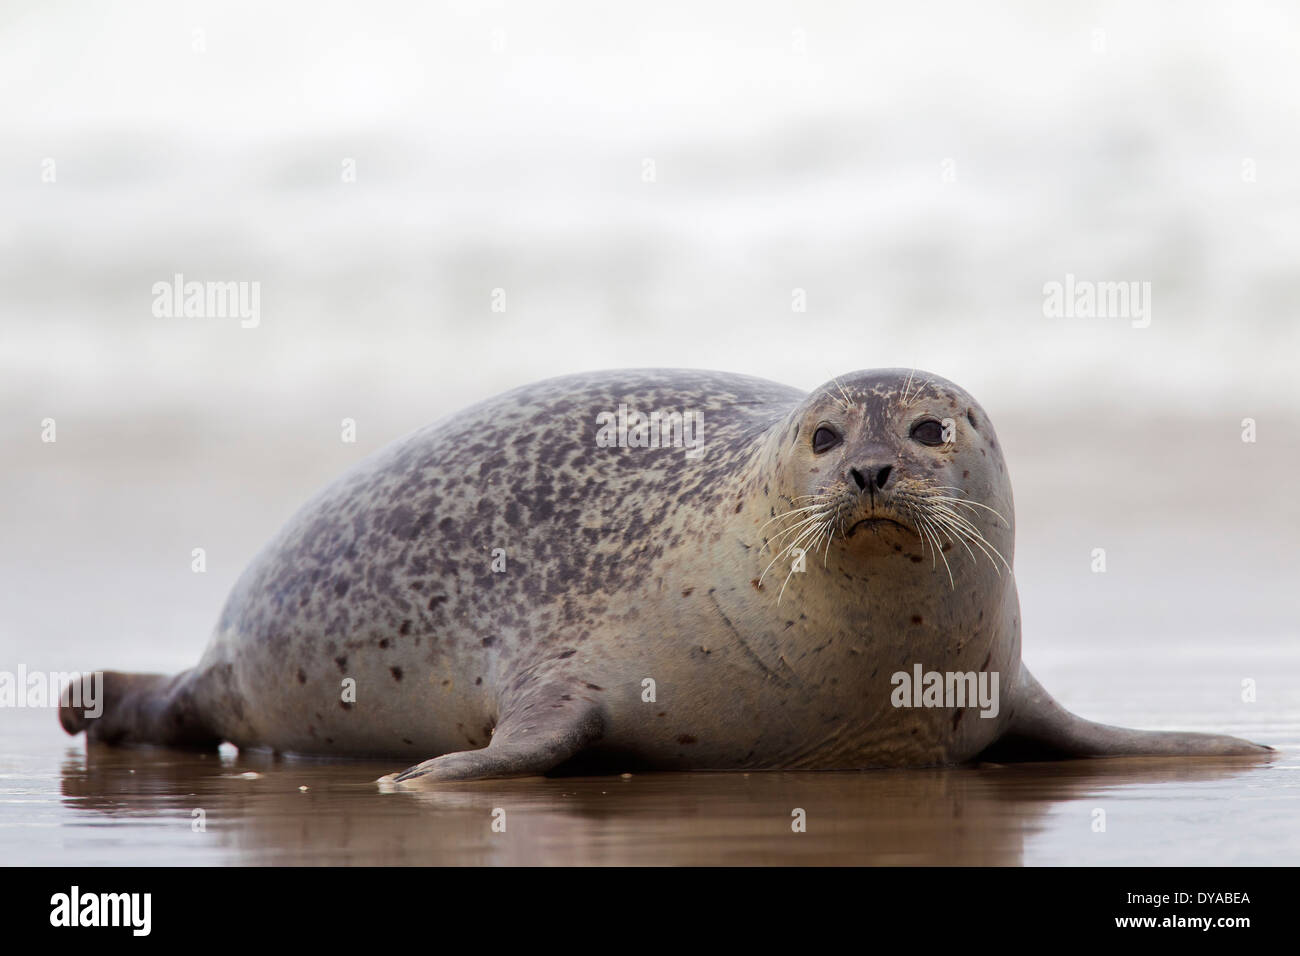 Common seal / harbor seal / harbour seal (Phoca vitulina) on the beach Stock Photo